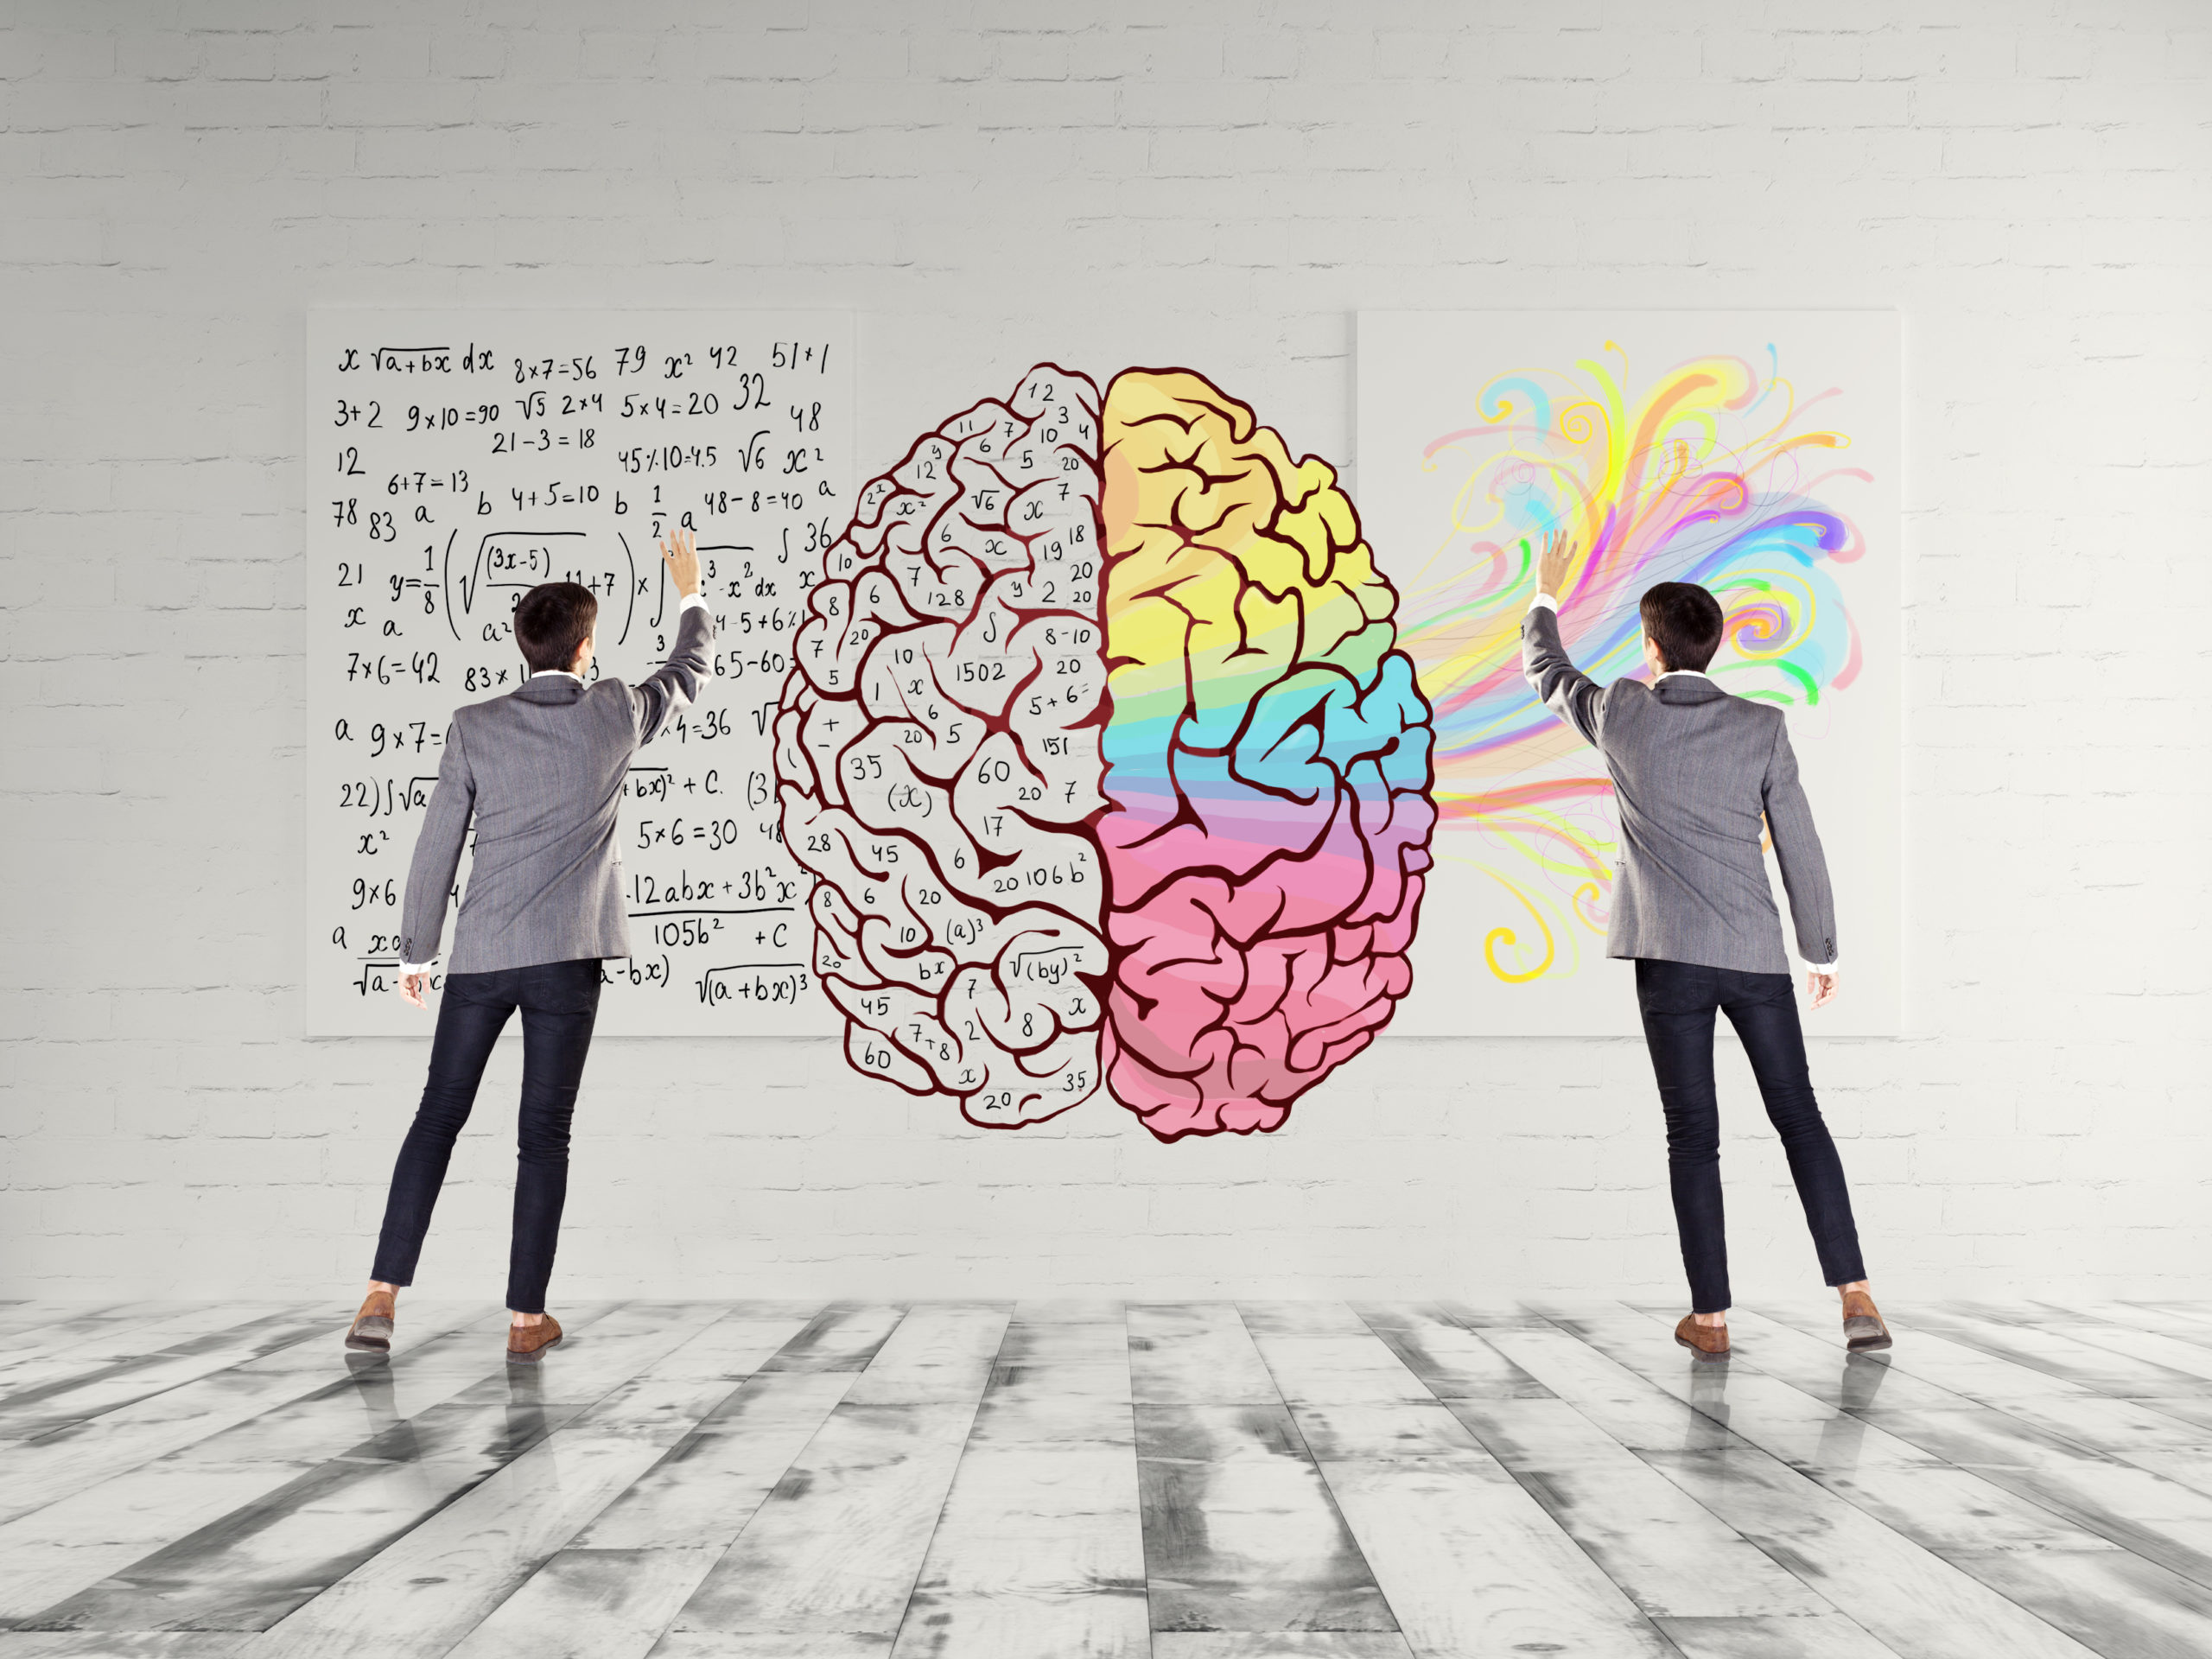 Illustration showing right-brain v. left-brain thinking